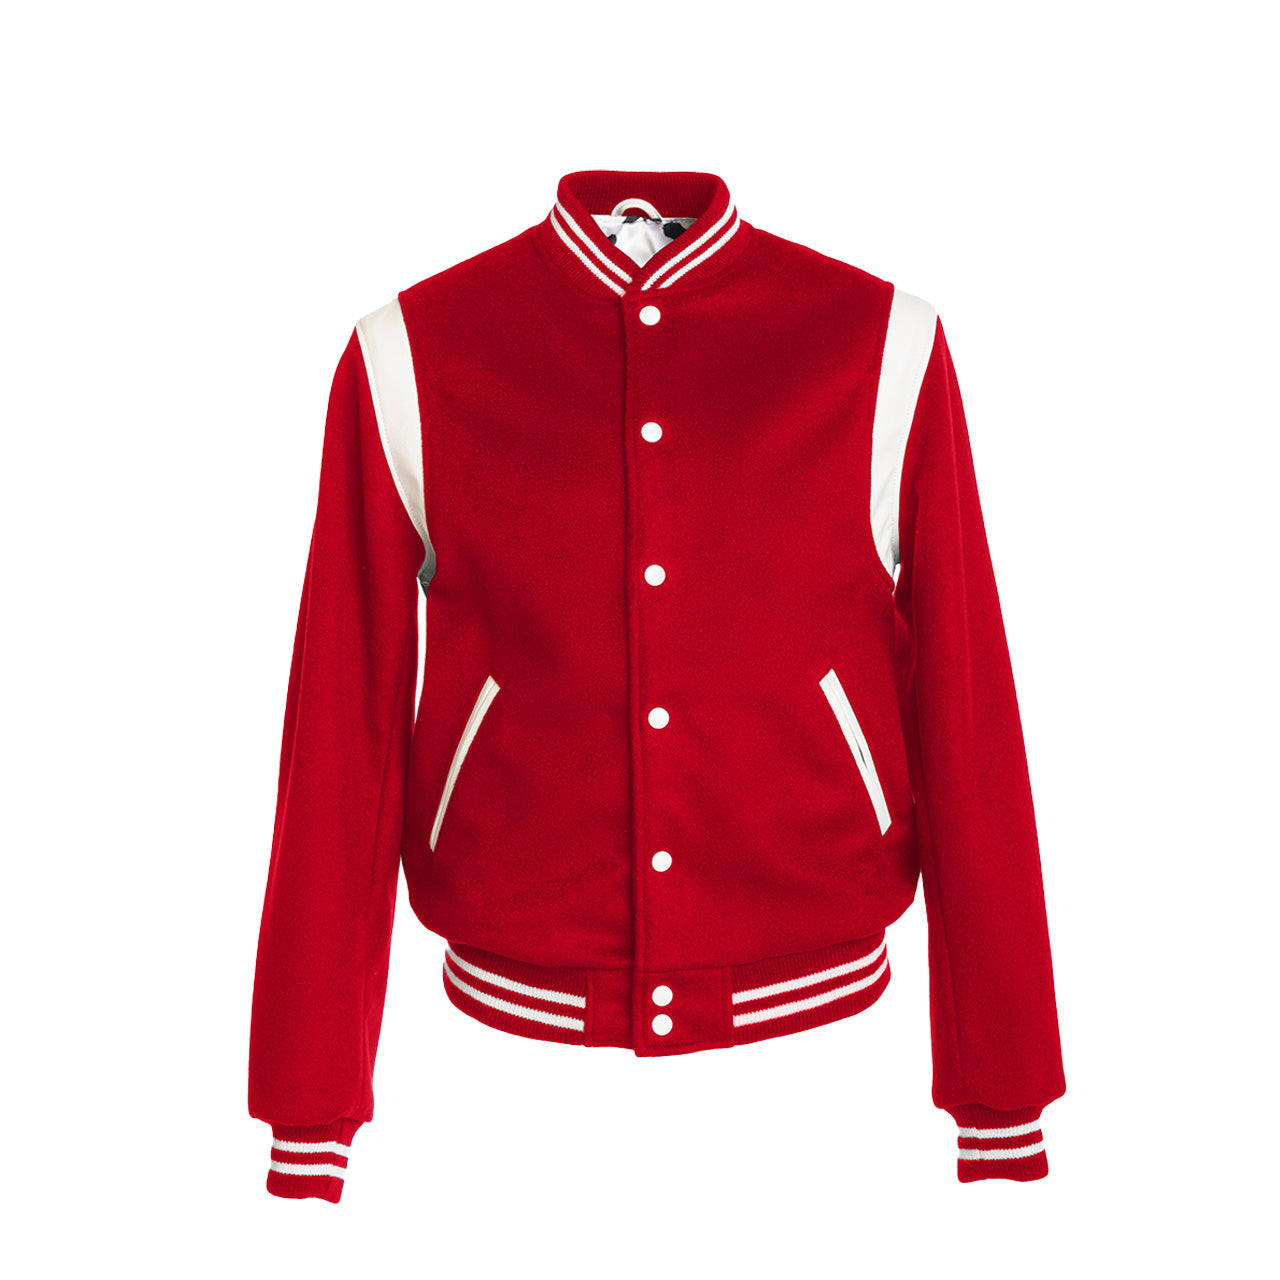 Rothesay Varsity Jacket in Red